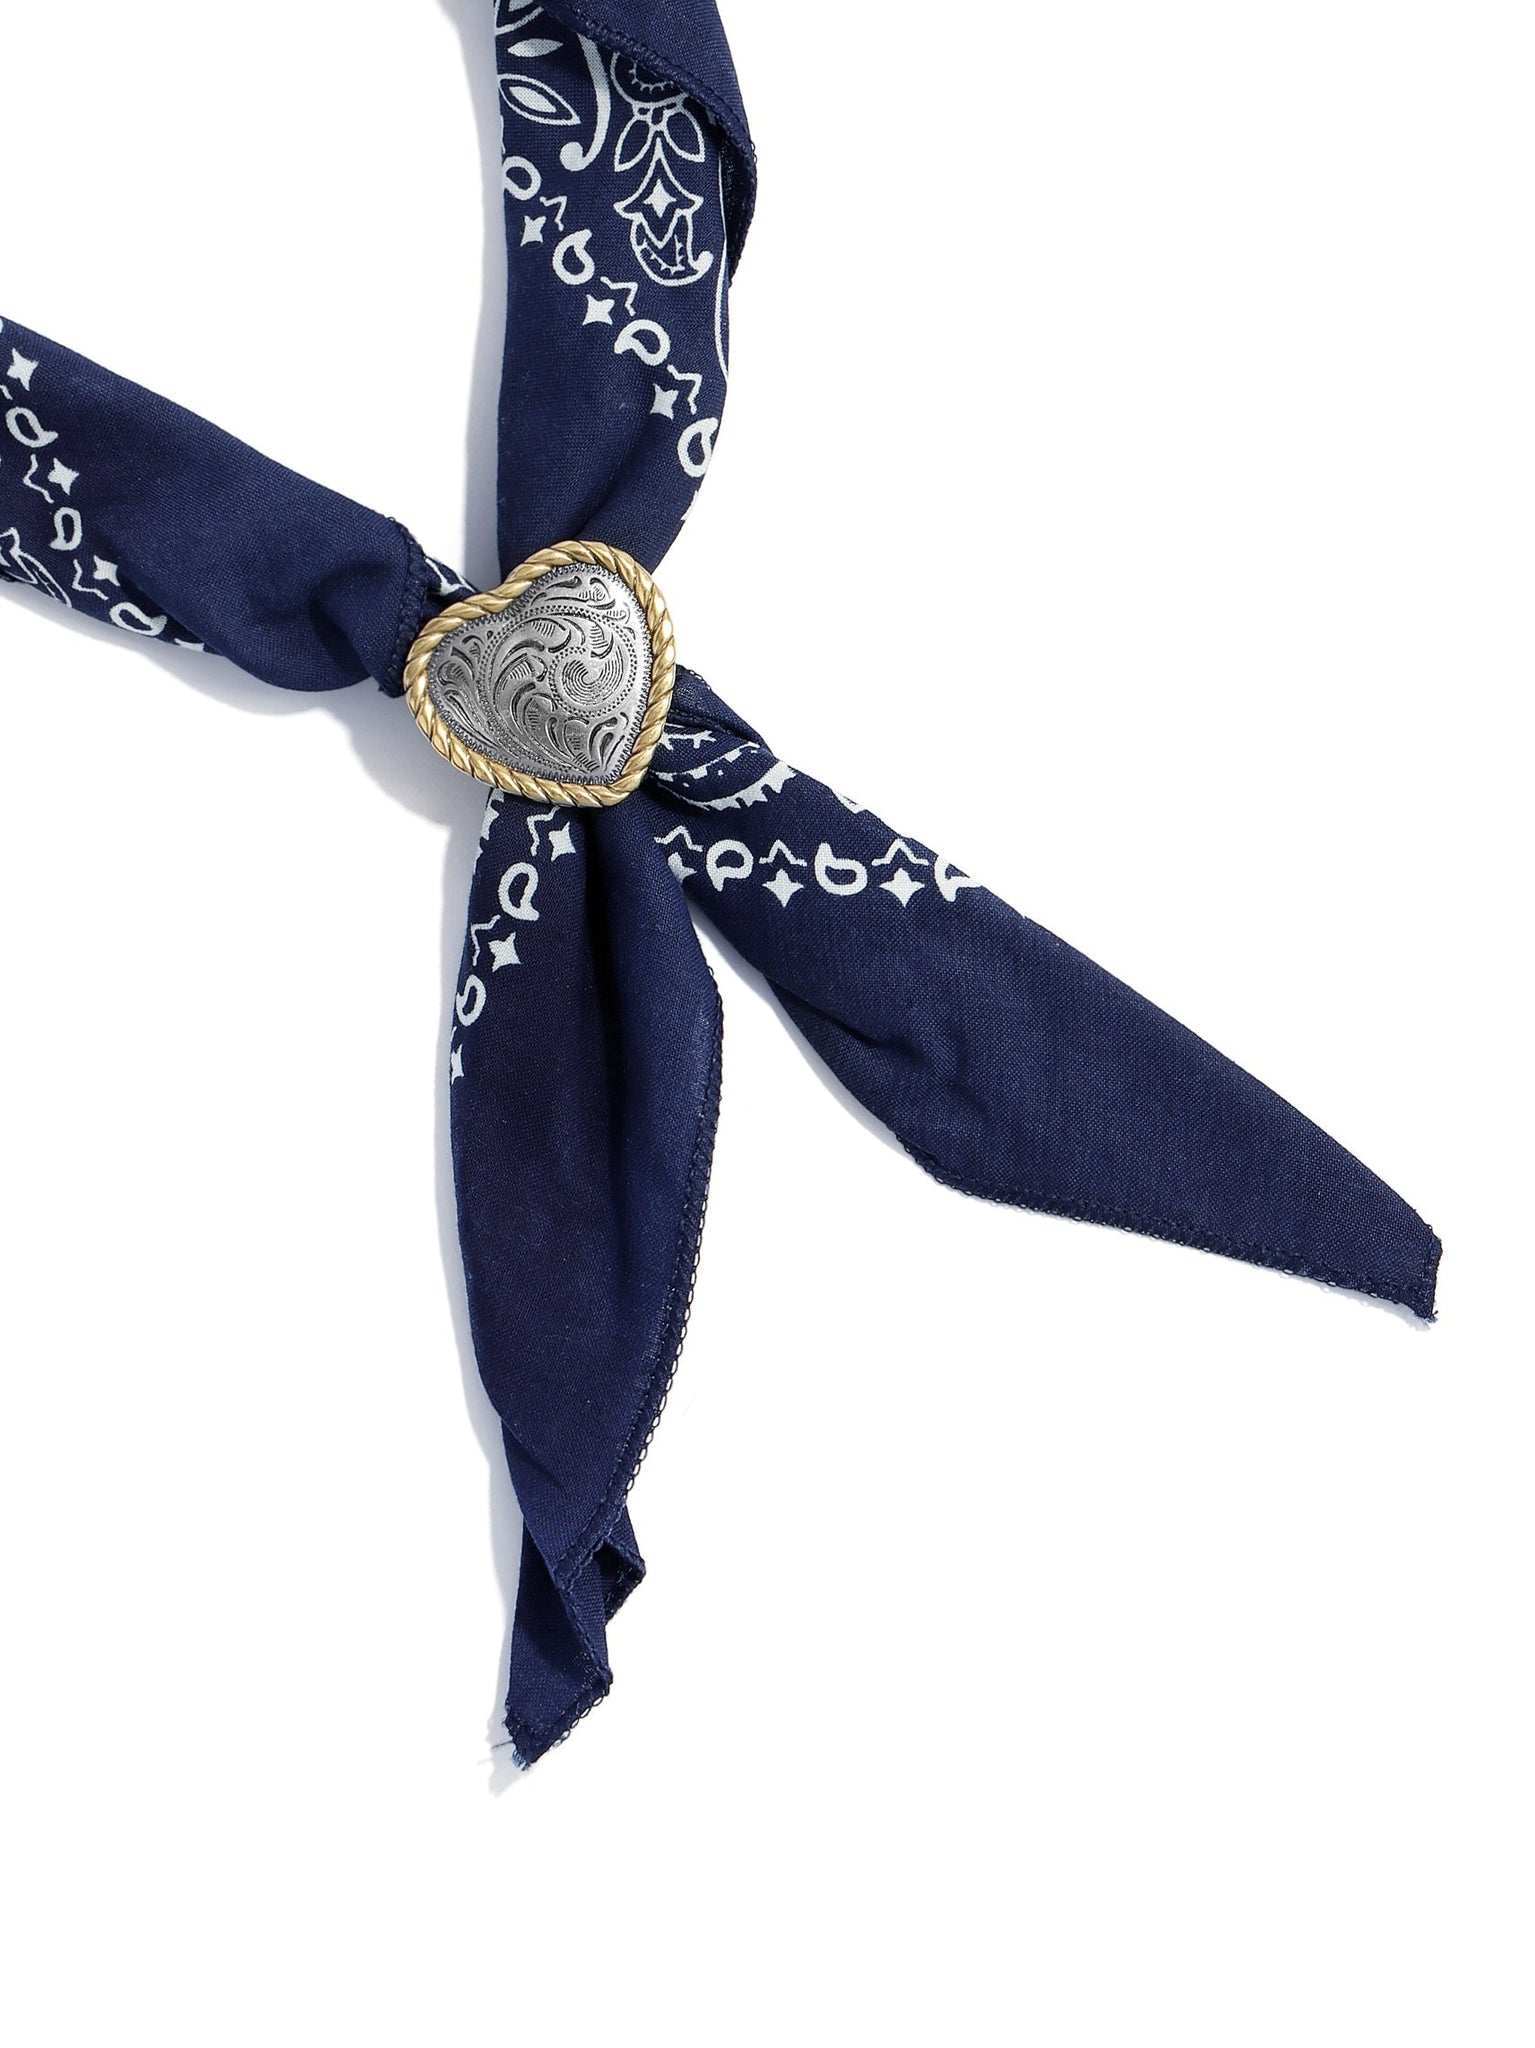 The Tulia Heart Bandana Necktie